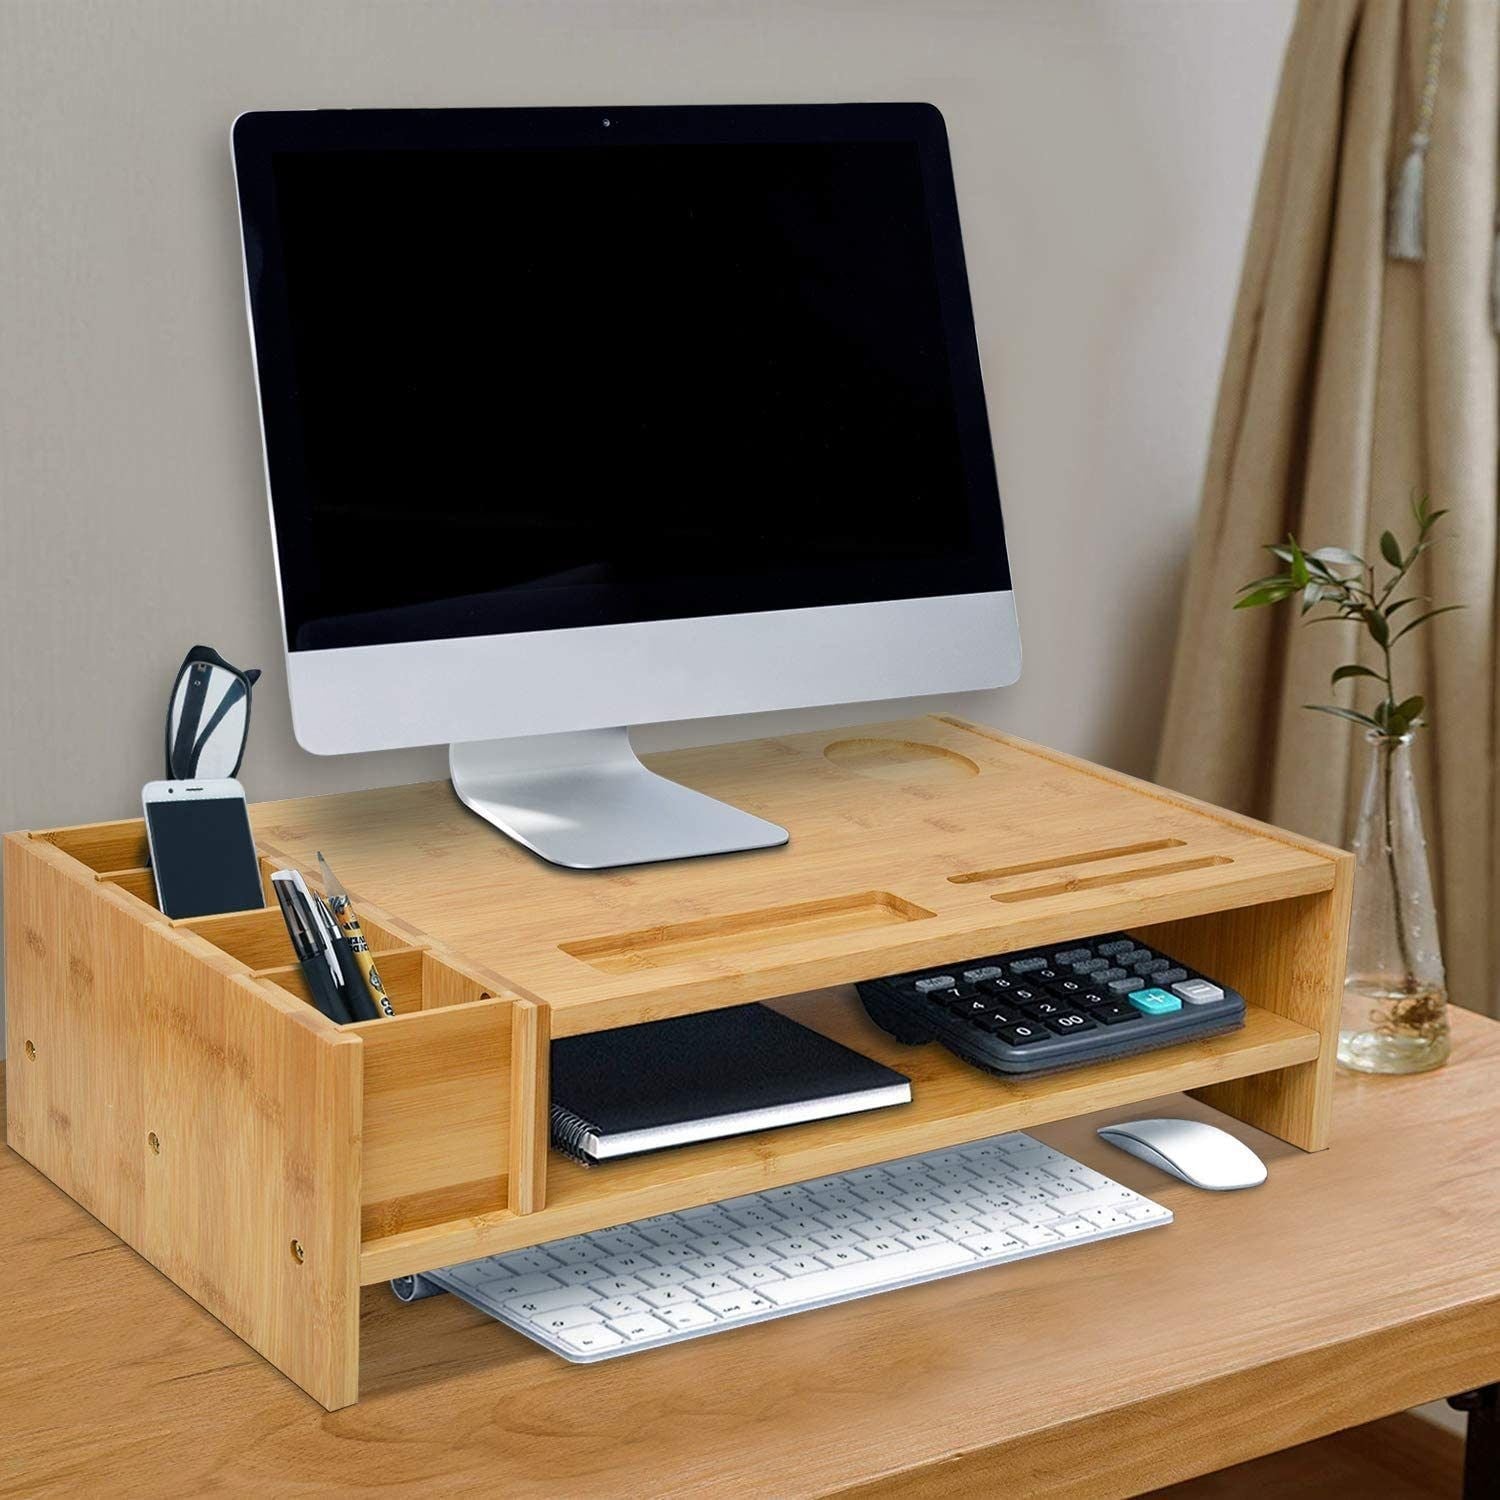 Bath Laptop 35326065 - Bamboo Stand Monitor Bed Organizer & Desktop Beyond Storage - Riser